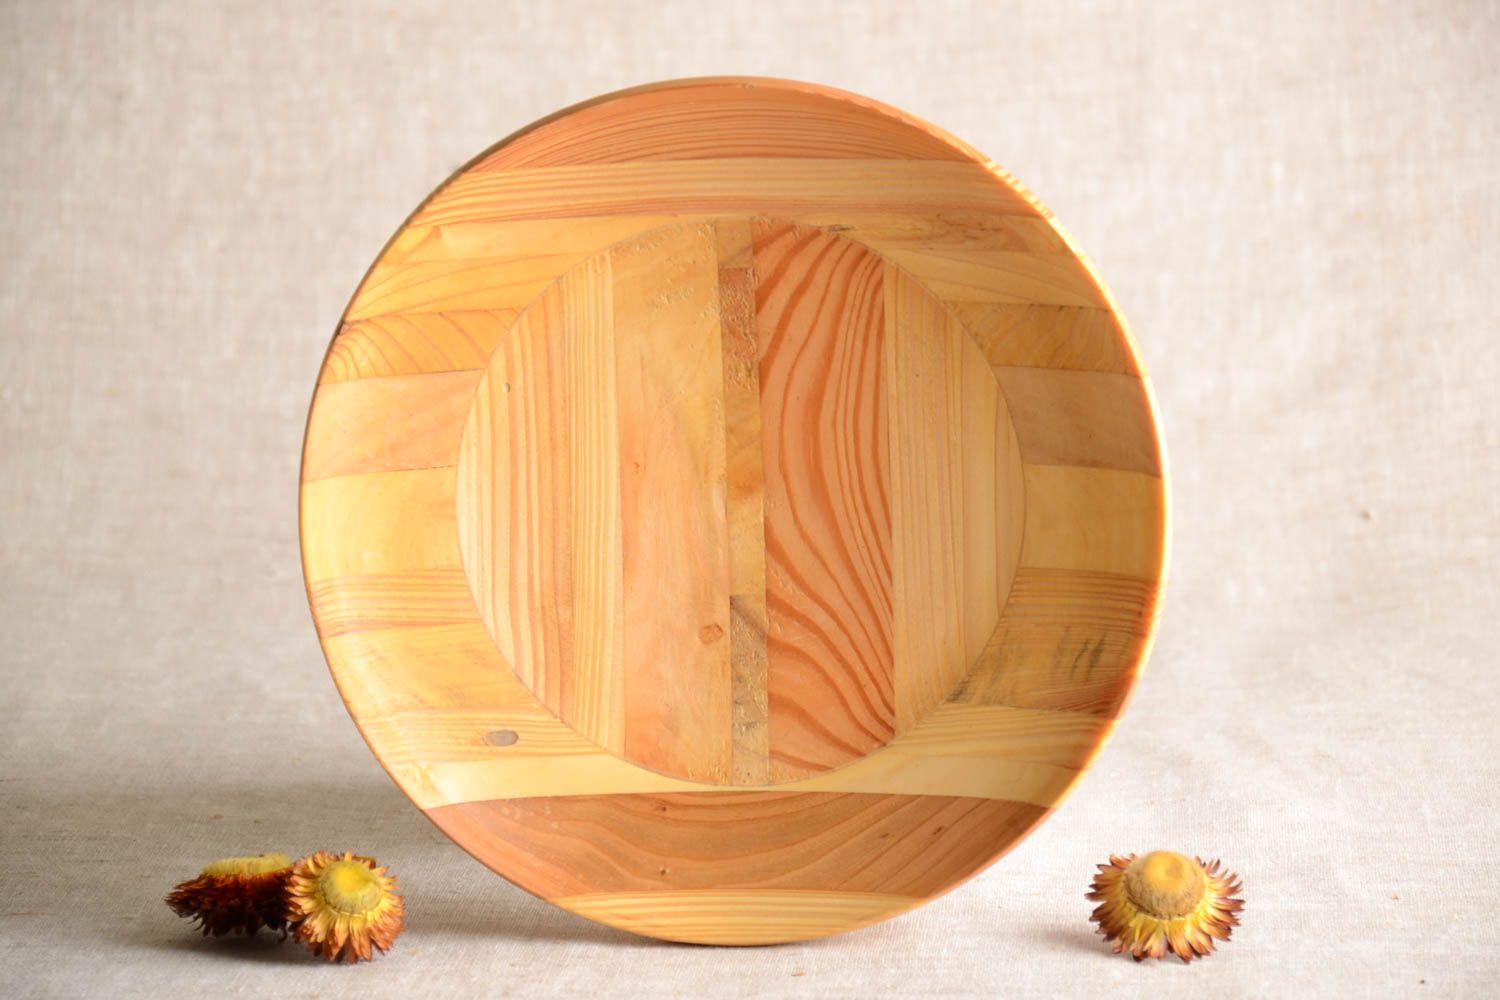 Handmade decorative wall plate wooden plate designs wood craft kitchen design photo 1